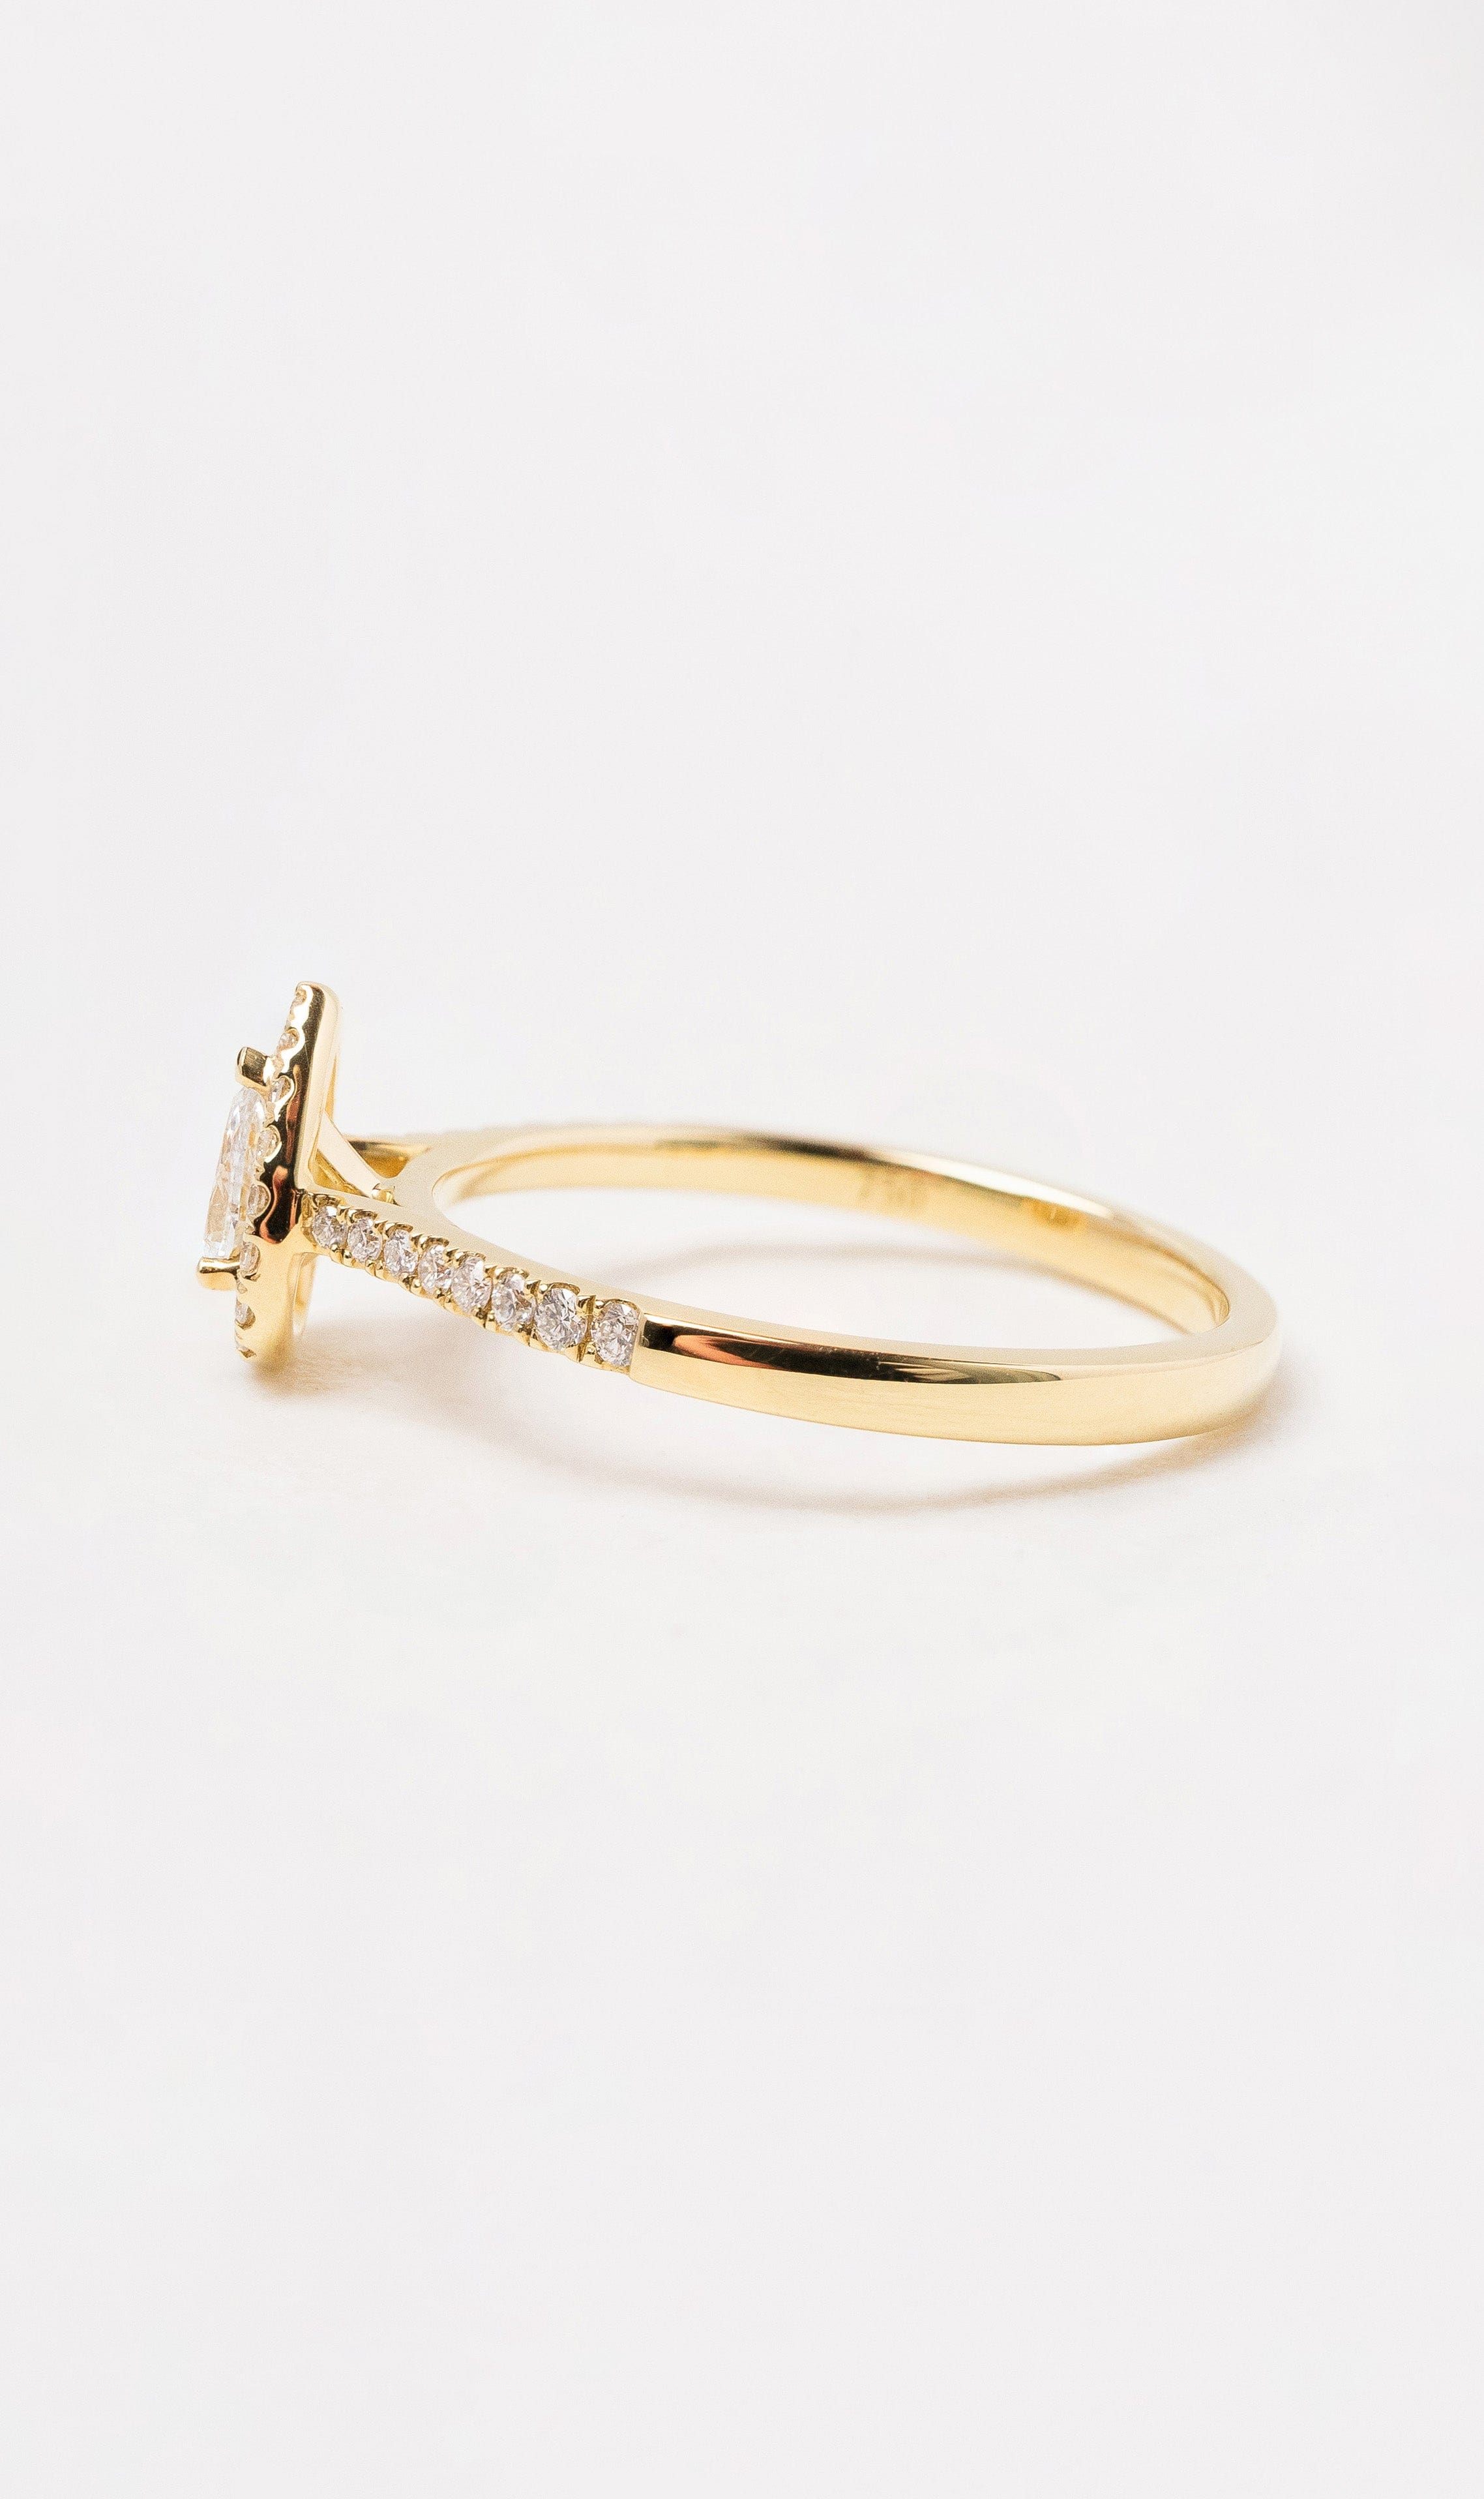 Hogans Family Jewellers 18K YG Pear Diamond Ring